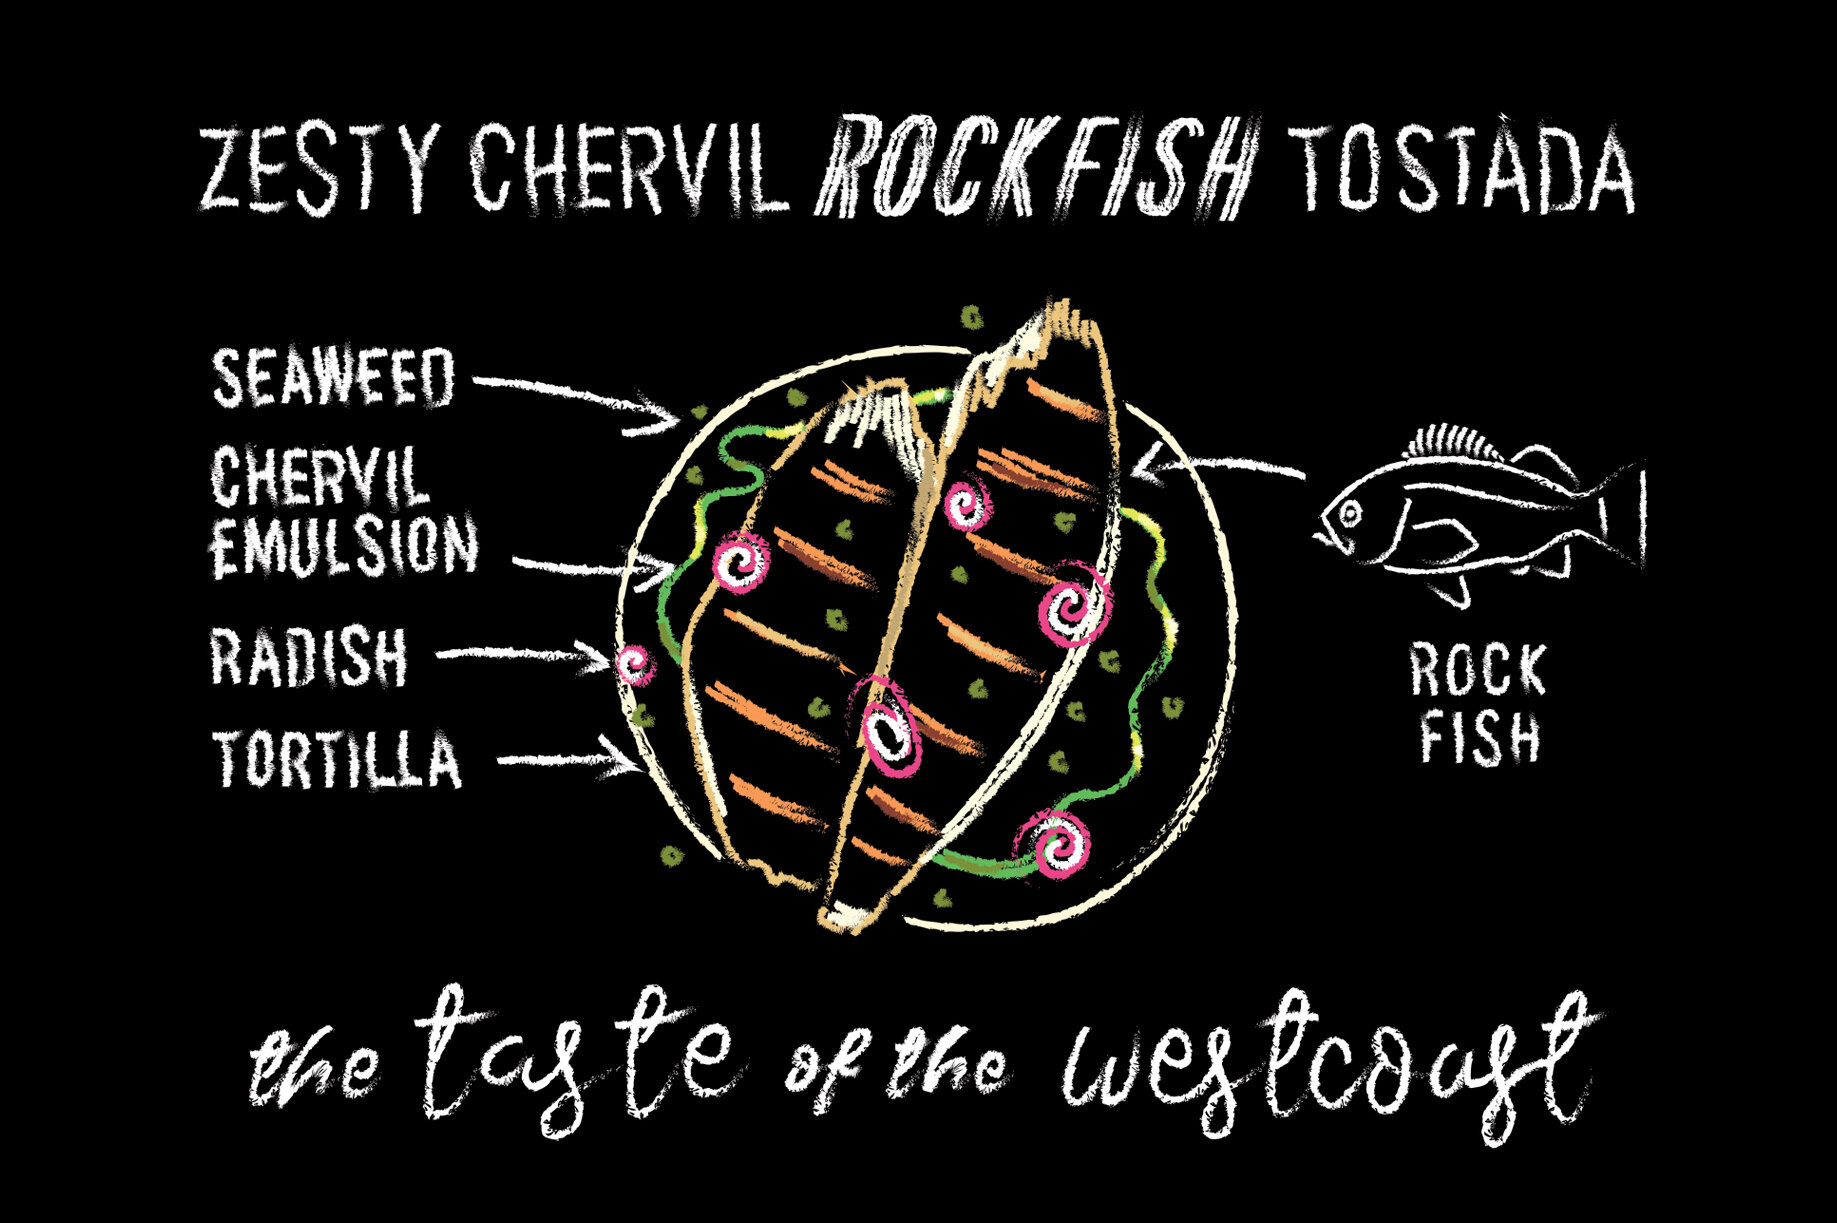 Rockfish Tostada with Zesty Chervil Sauce (Copy)